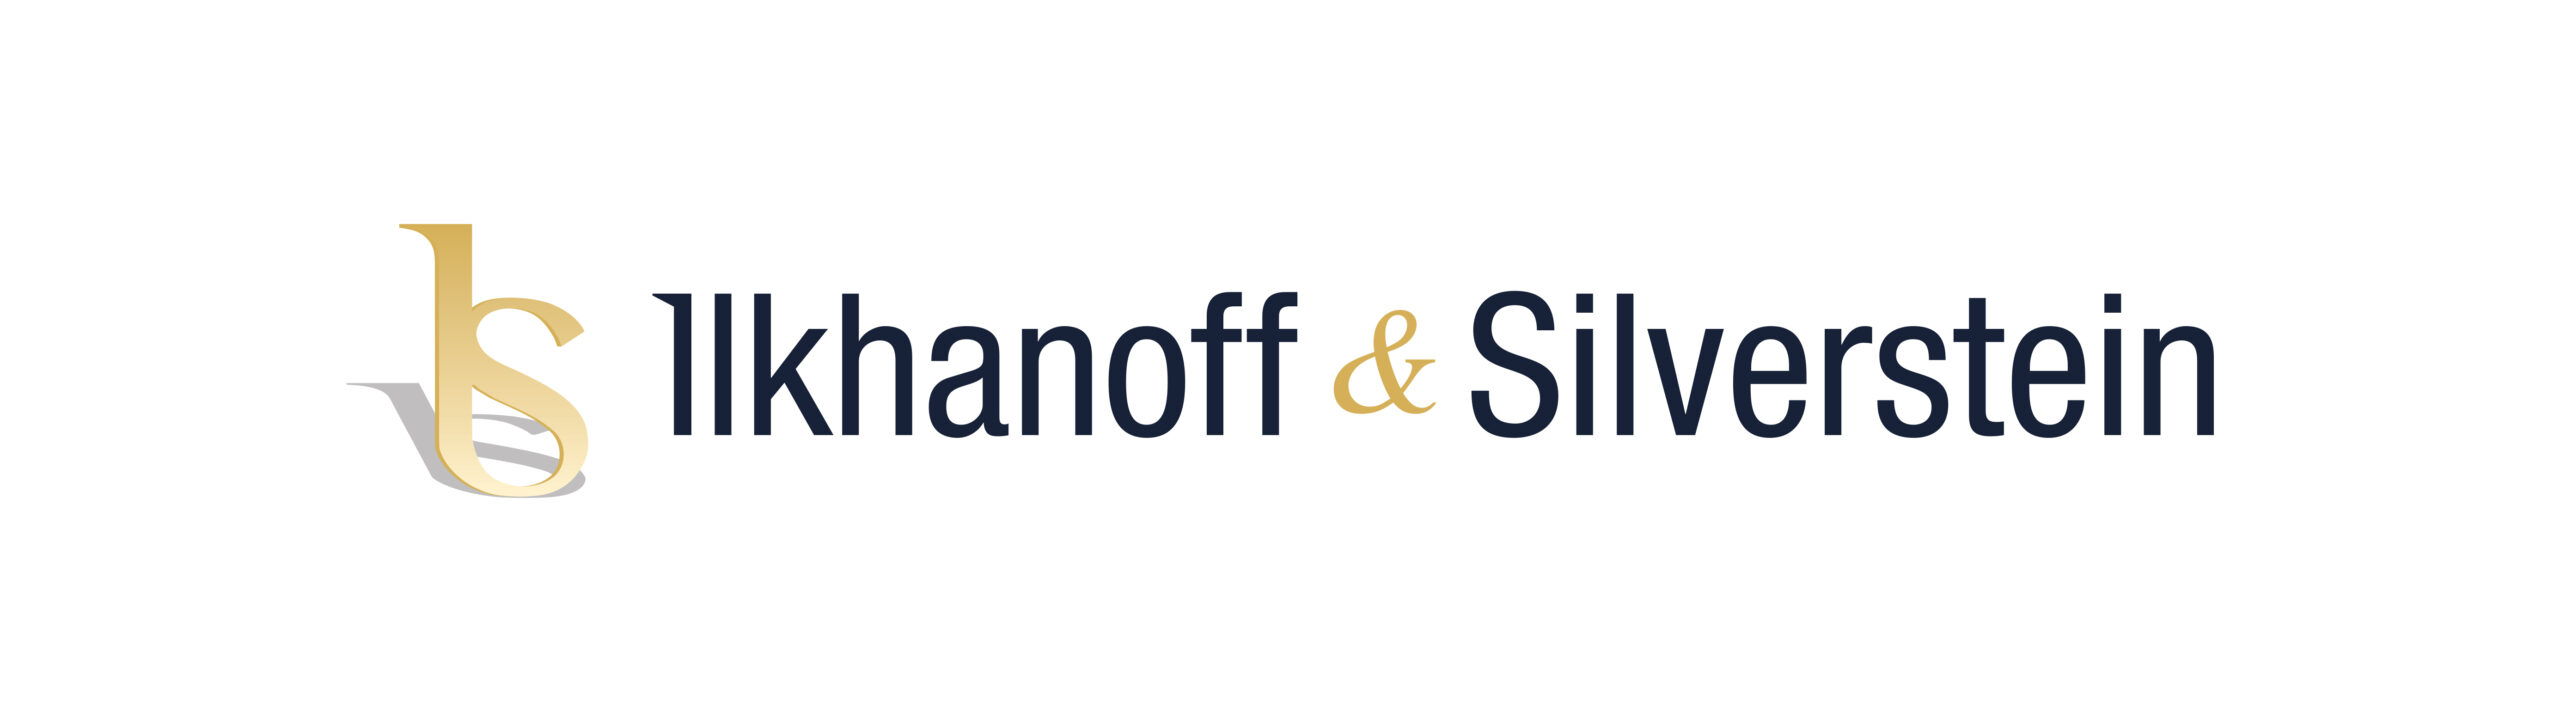 Logo for Ilkhanoff & Silverstein